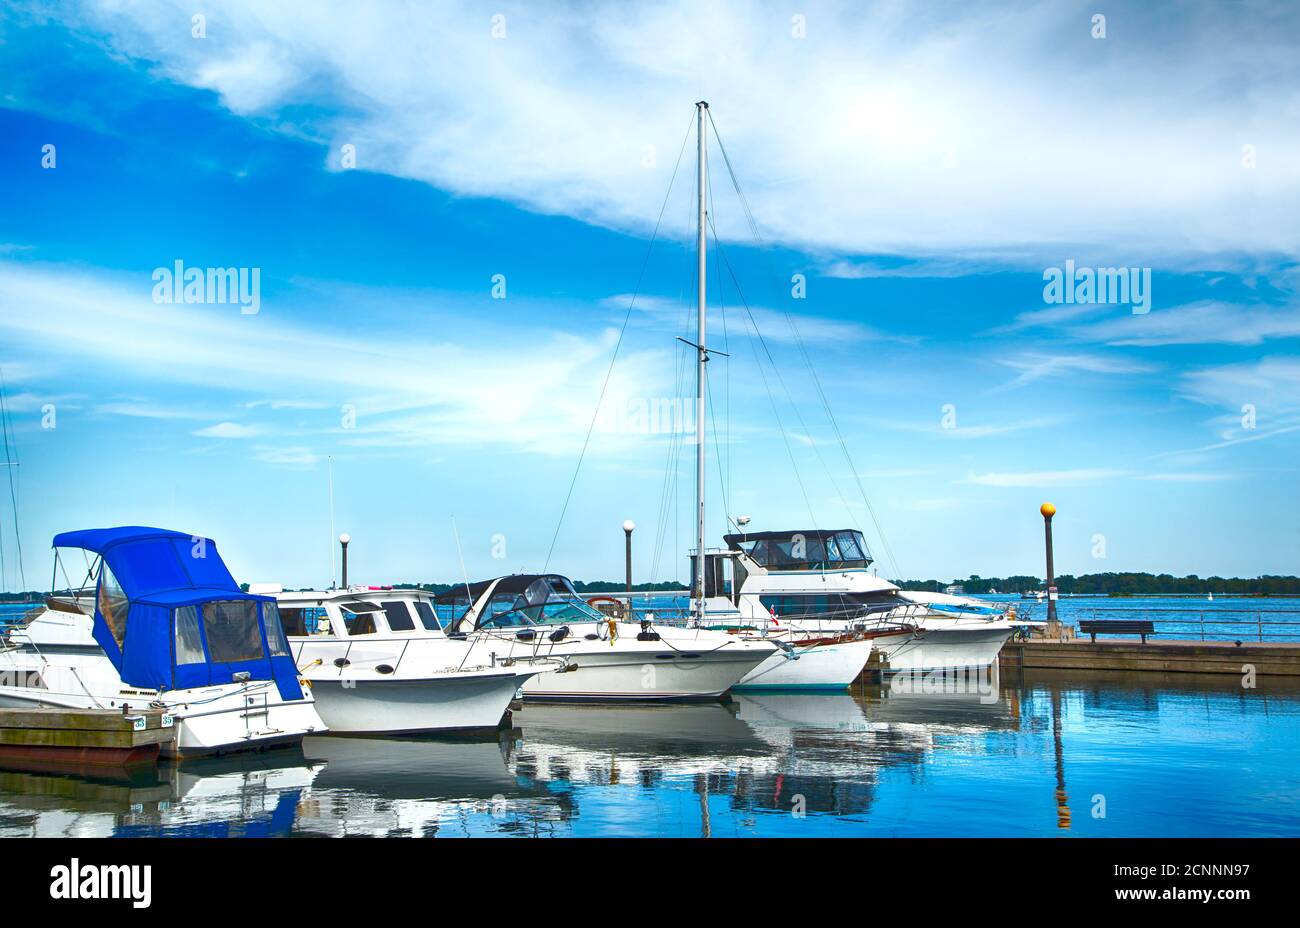 Boats moored in a marina in summer, Lake Ontario, Toronto, Canada Stock Photo